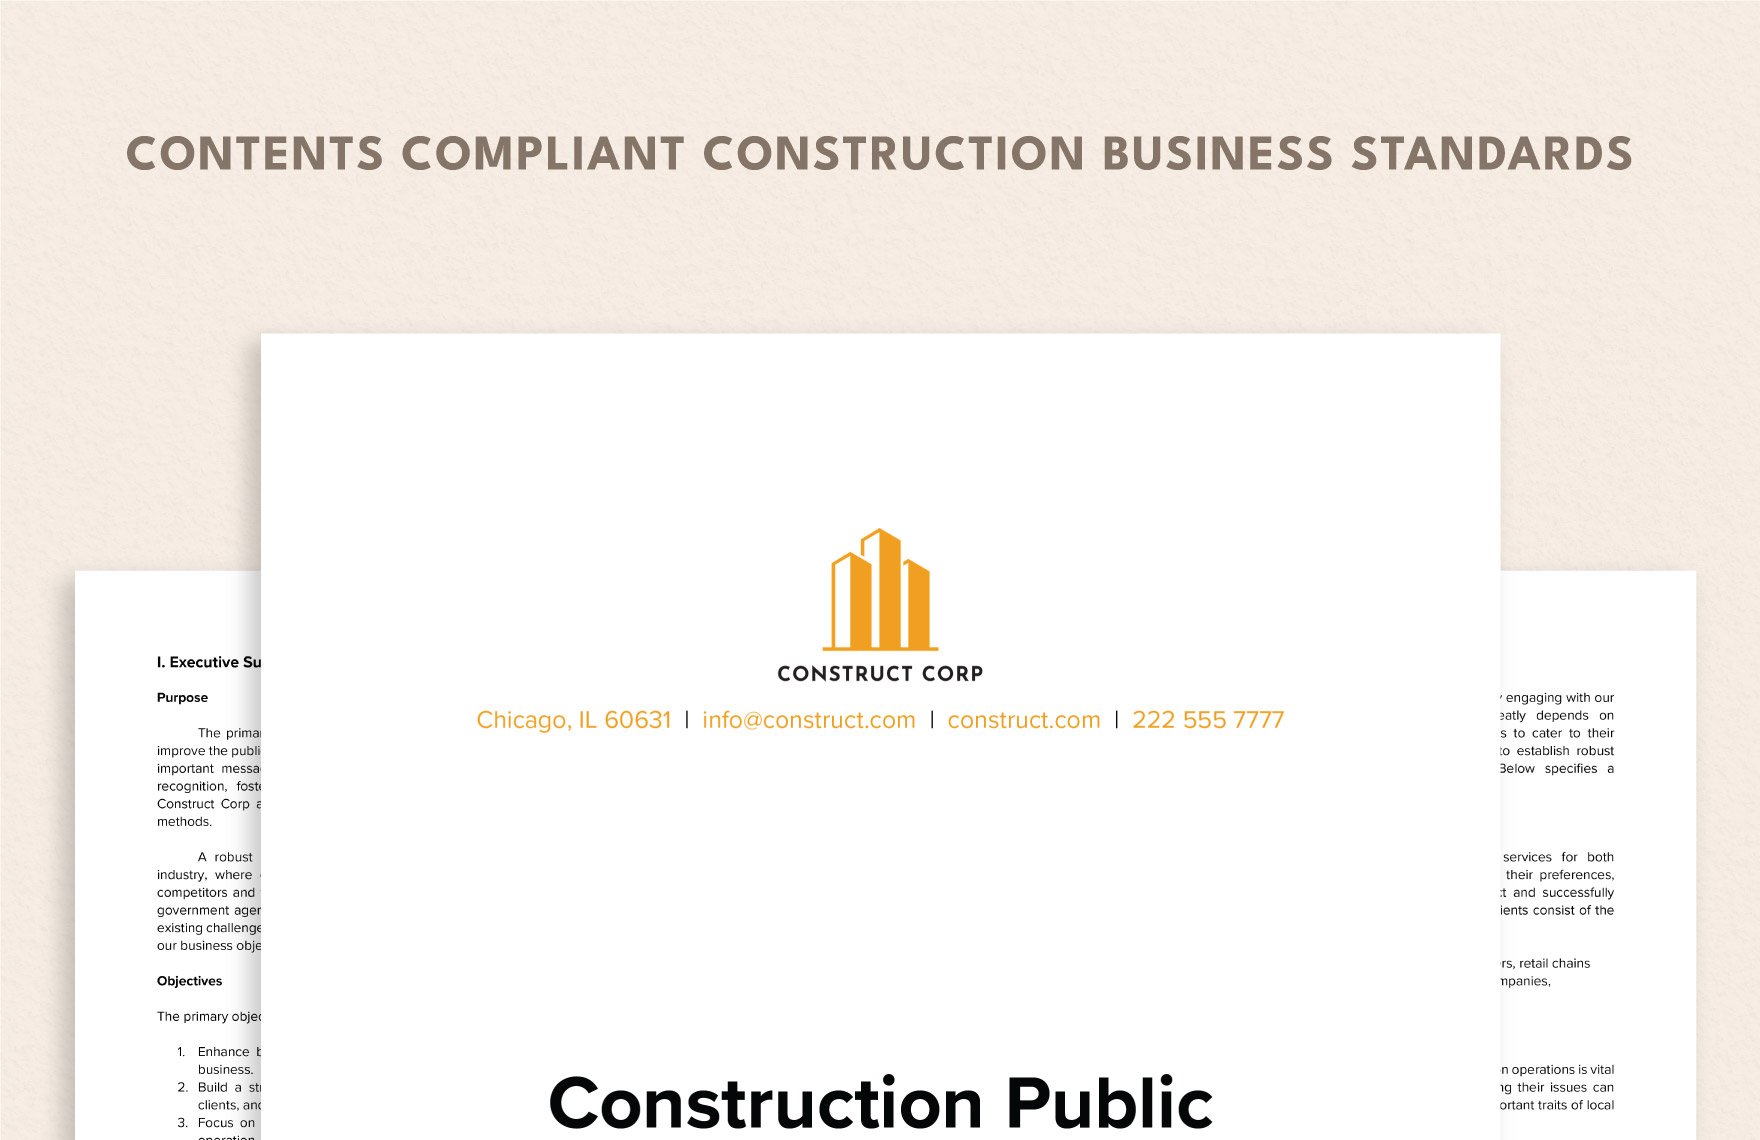 Construction Public Relations (PR) Strategy Plan Template